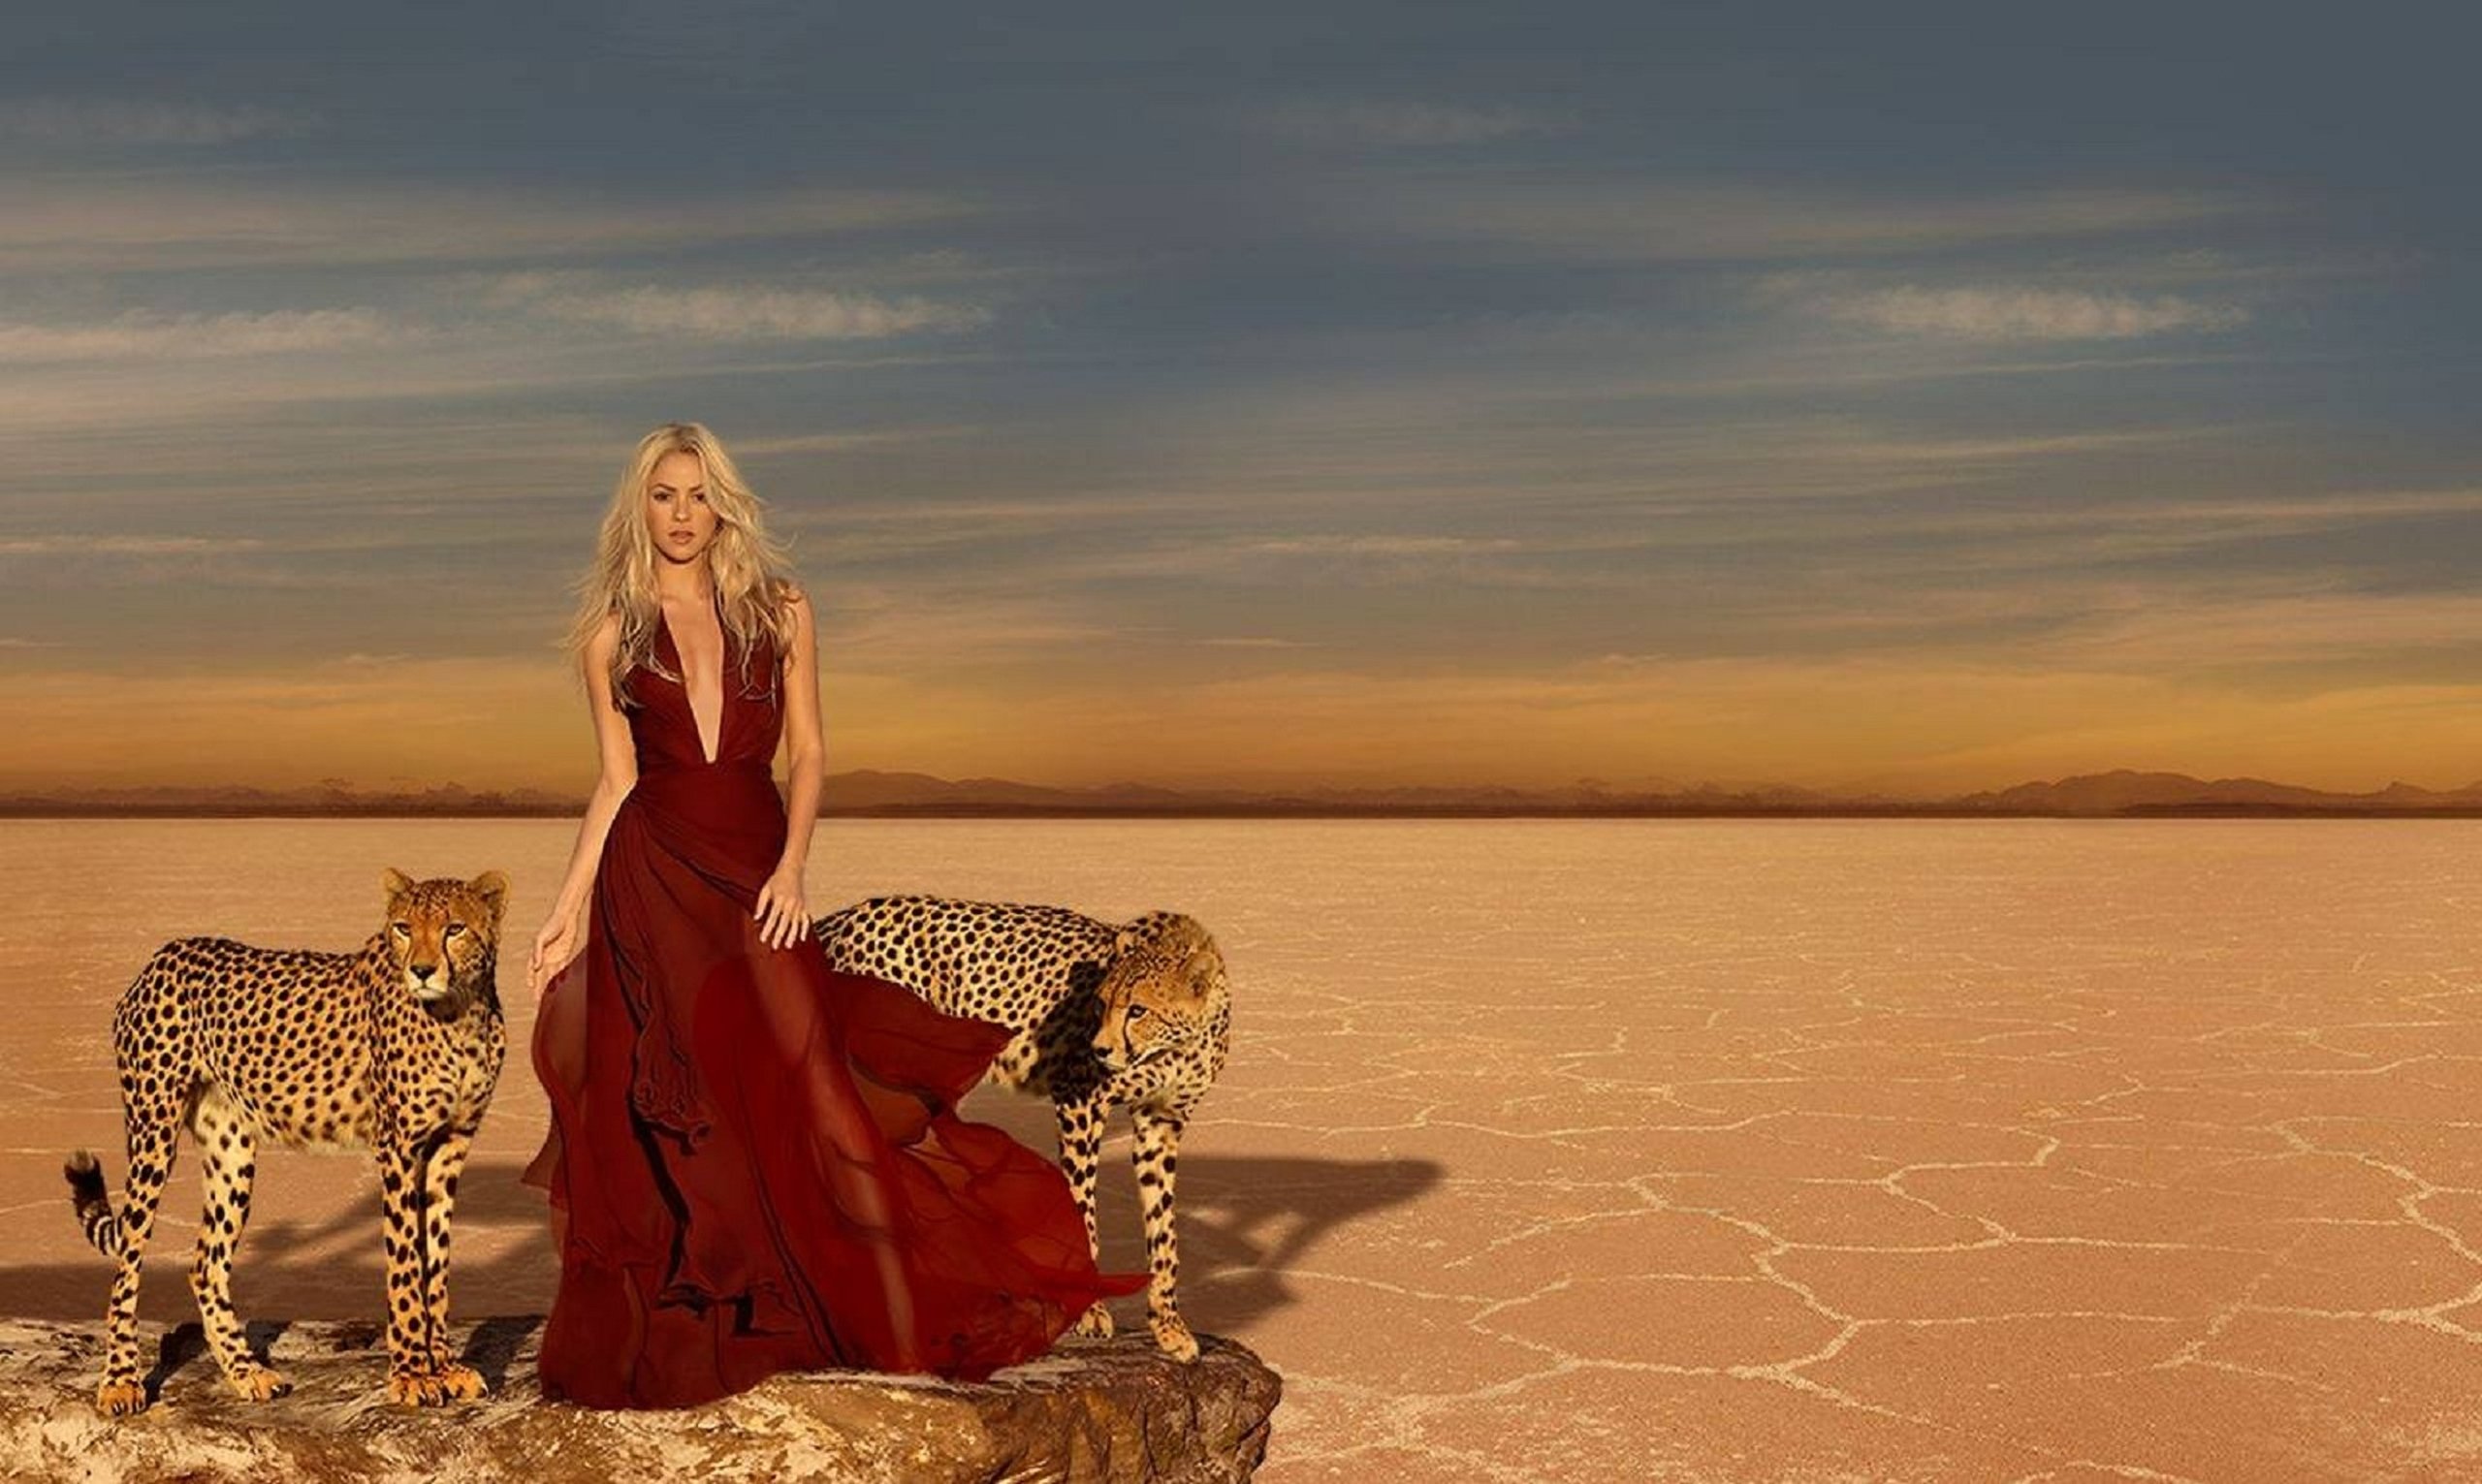 gown, Red, Girl, Beautiful, Dress, Woman, Shakira, Cheetahs, Photography, Photoshoot, Desert, Singer, Beauty, Female Wallpaper